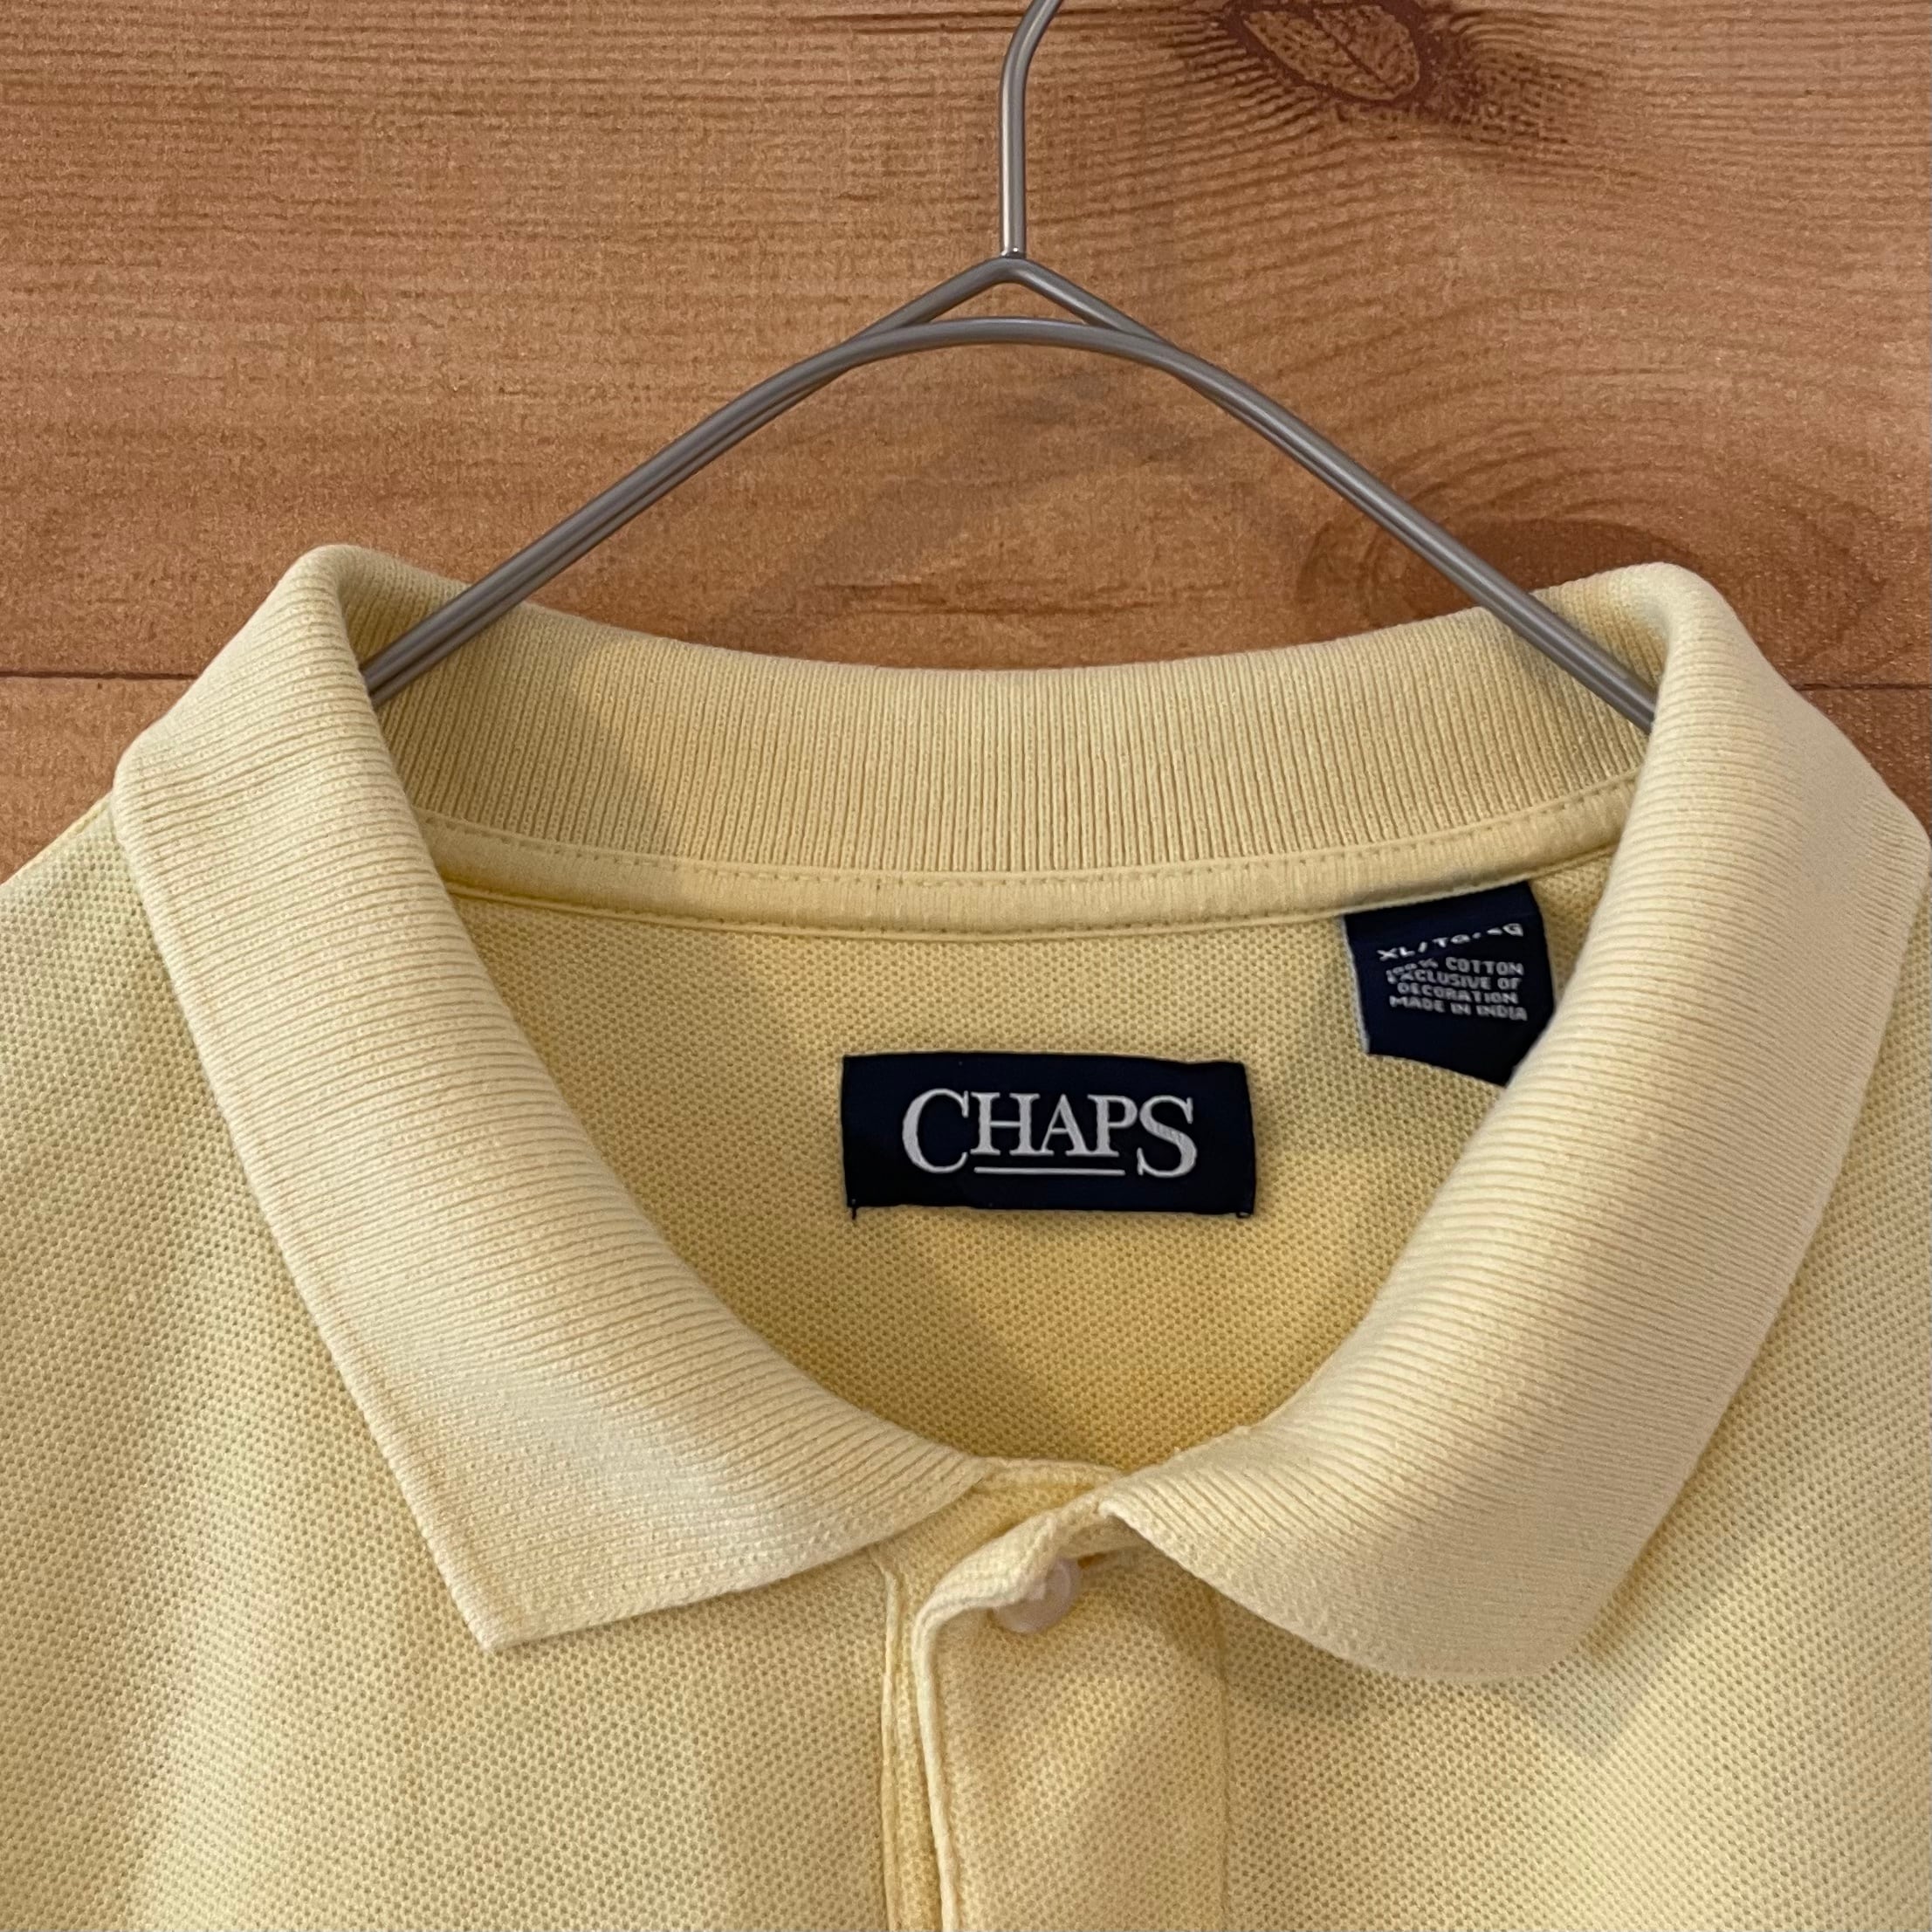 CHAPS】ビッグサイズ ポロシャツ XL 刺繍ロゴ ライトイエロー